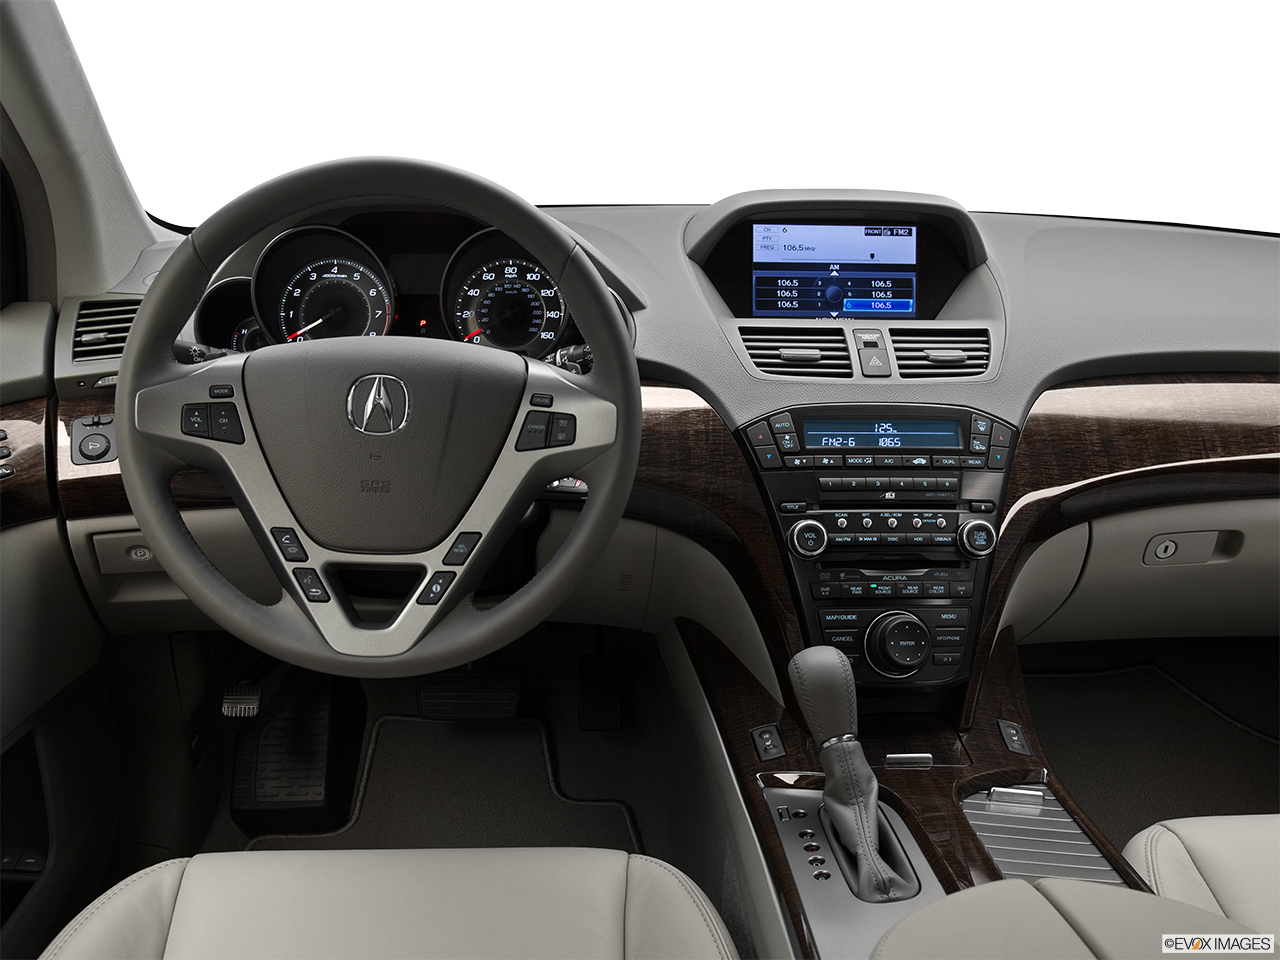 2011 Acura MDX MDX Steering wheel/Center Console. 